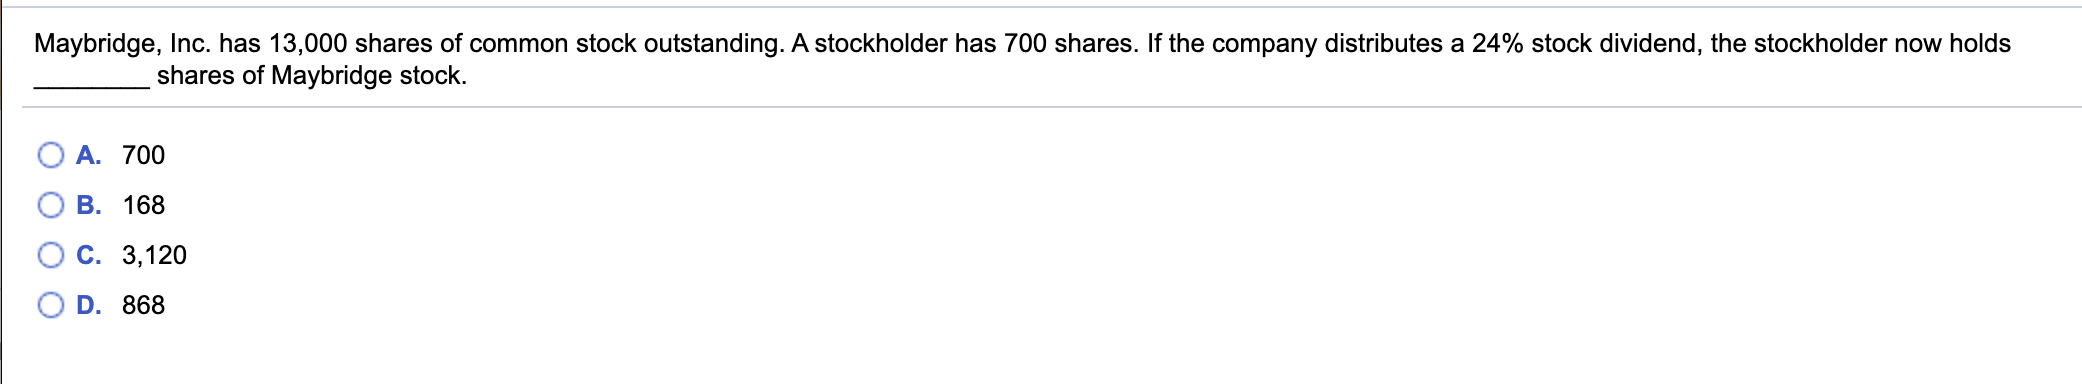 A stockholder has 700 shares. 